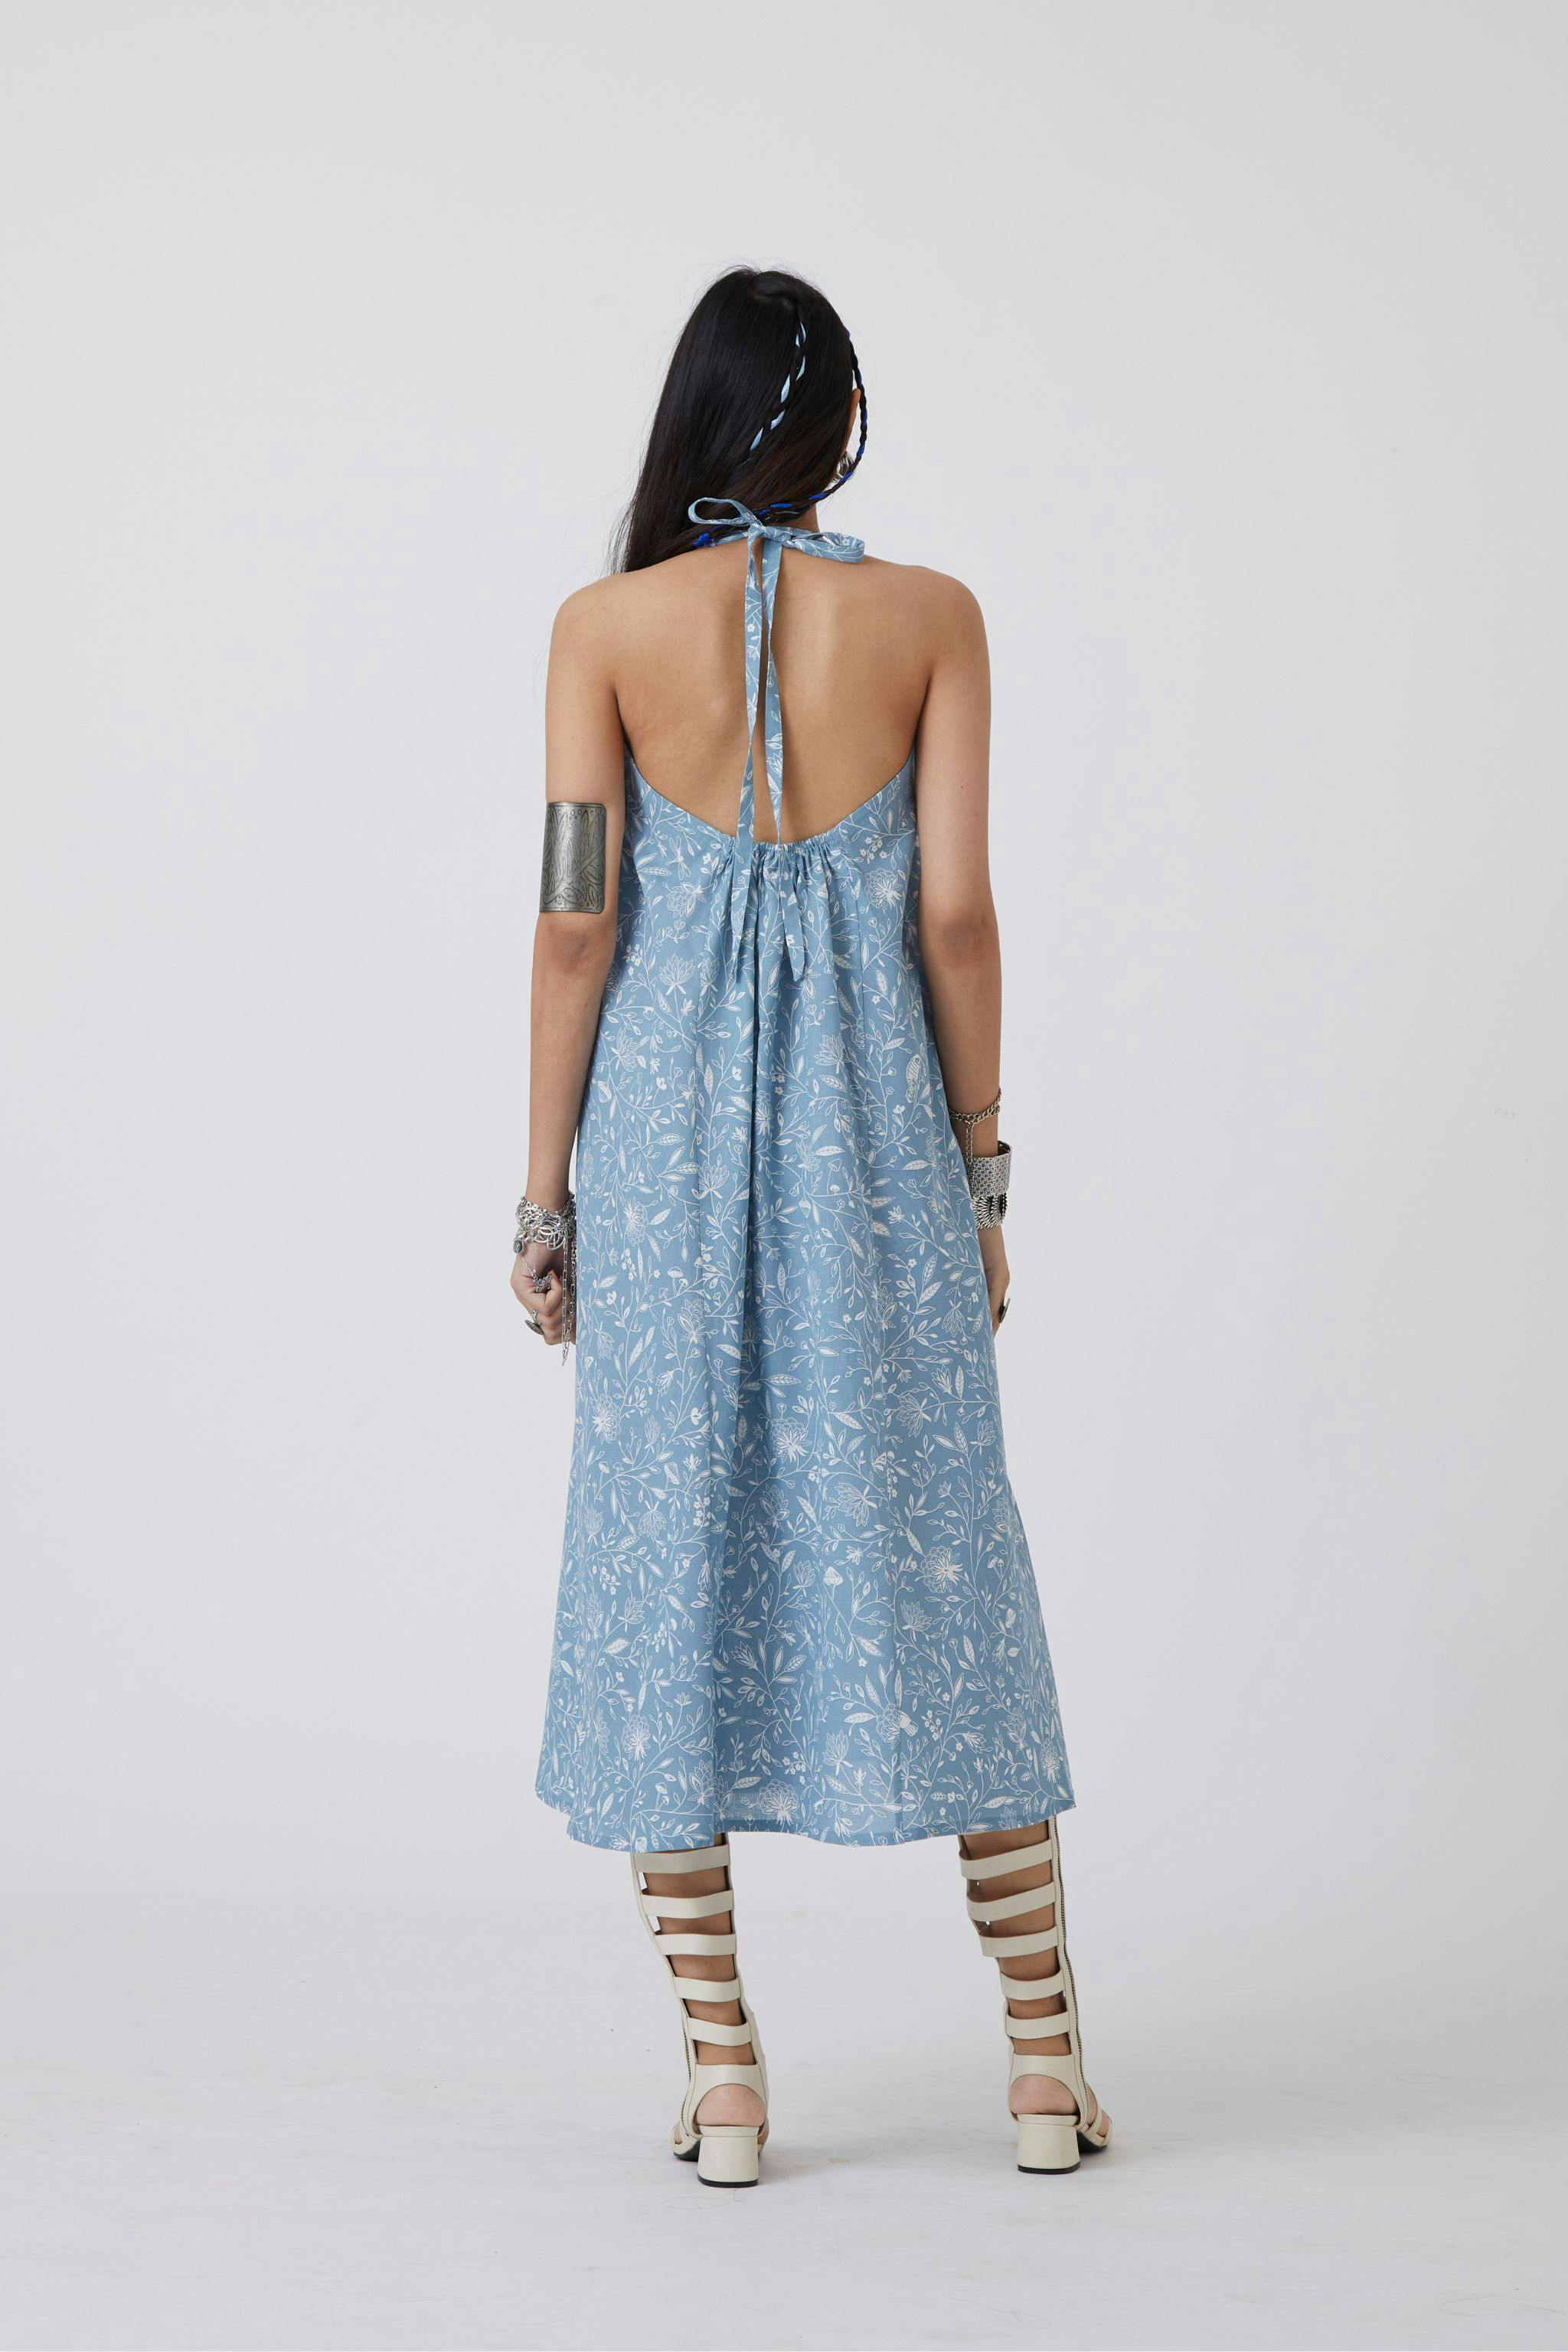 Thumbnail preview #1 for Chepi Print - Dress